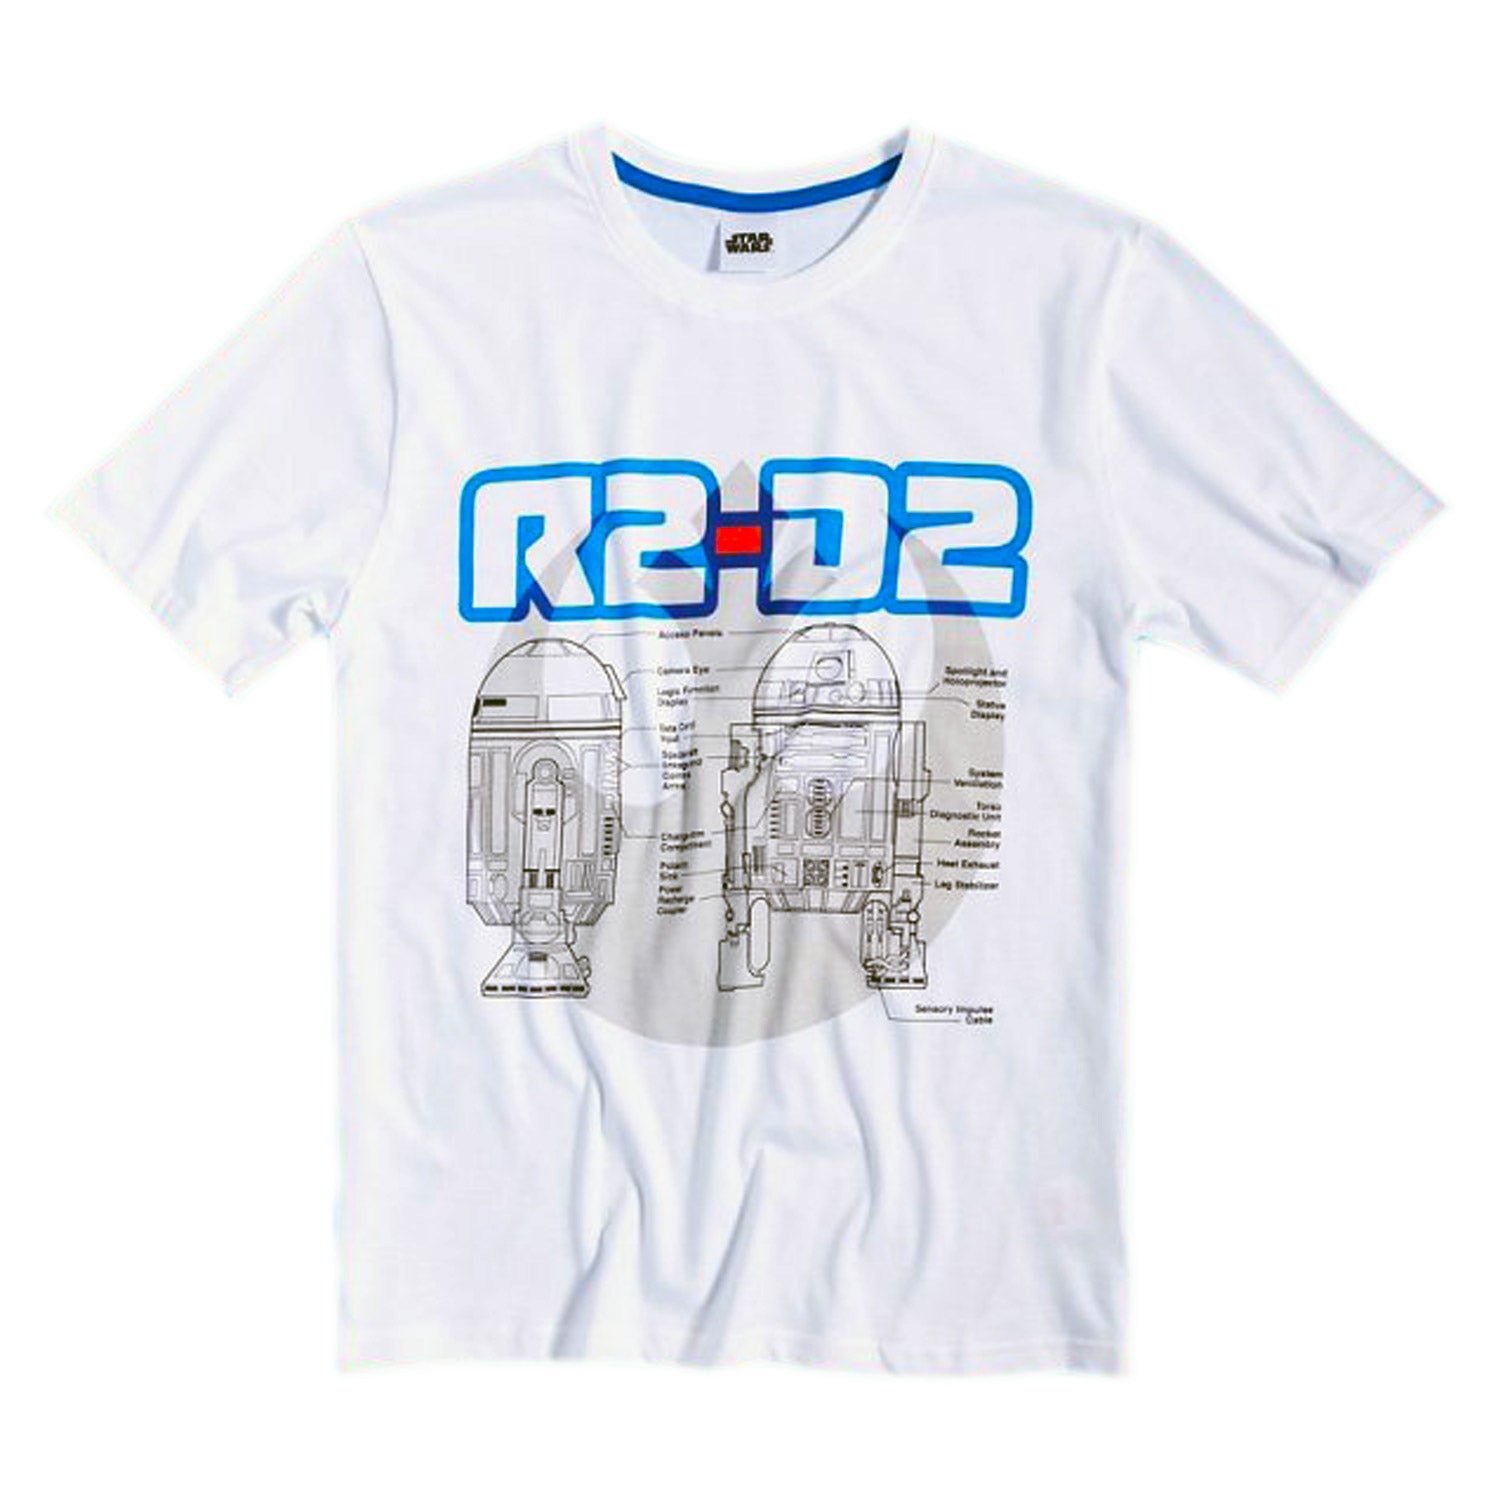 Mens Star Wars Pyjamas Loungewear Set - R2D2 Shirt